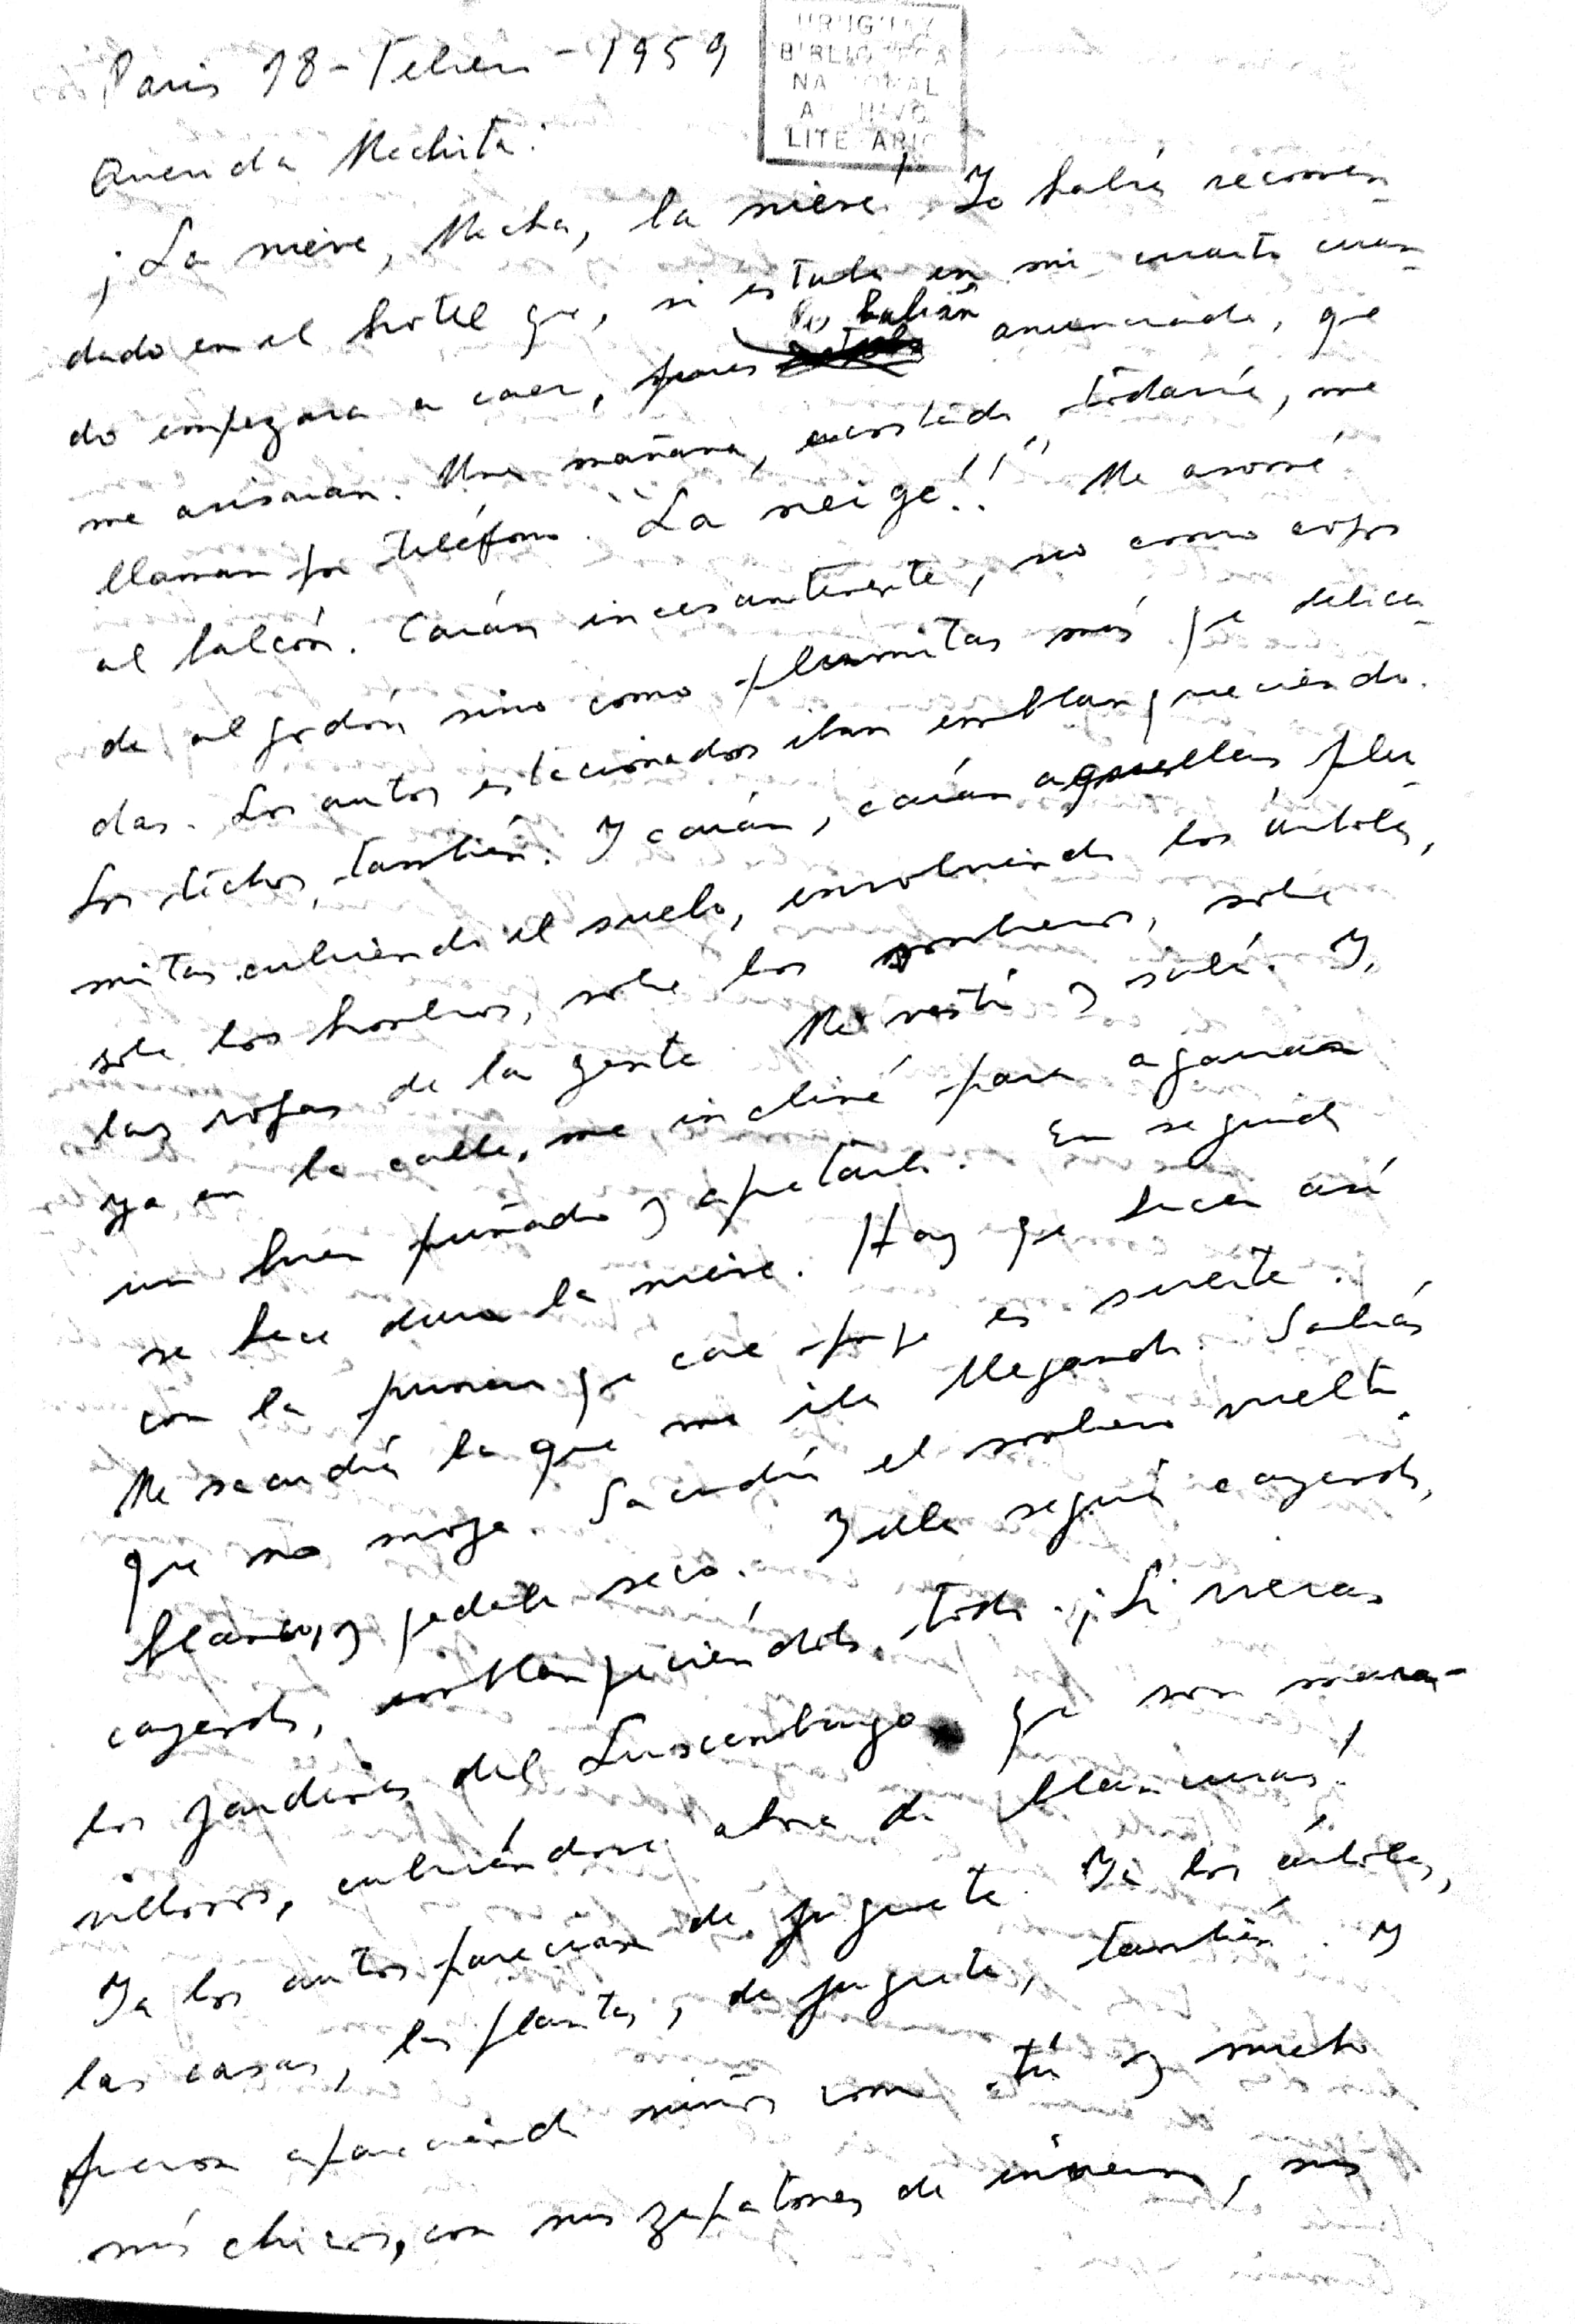 carta escrita a mano